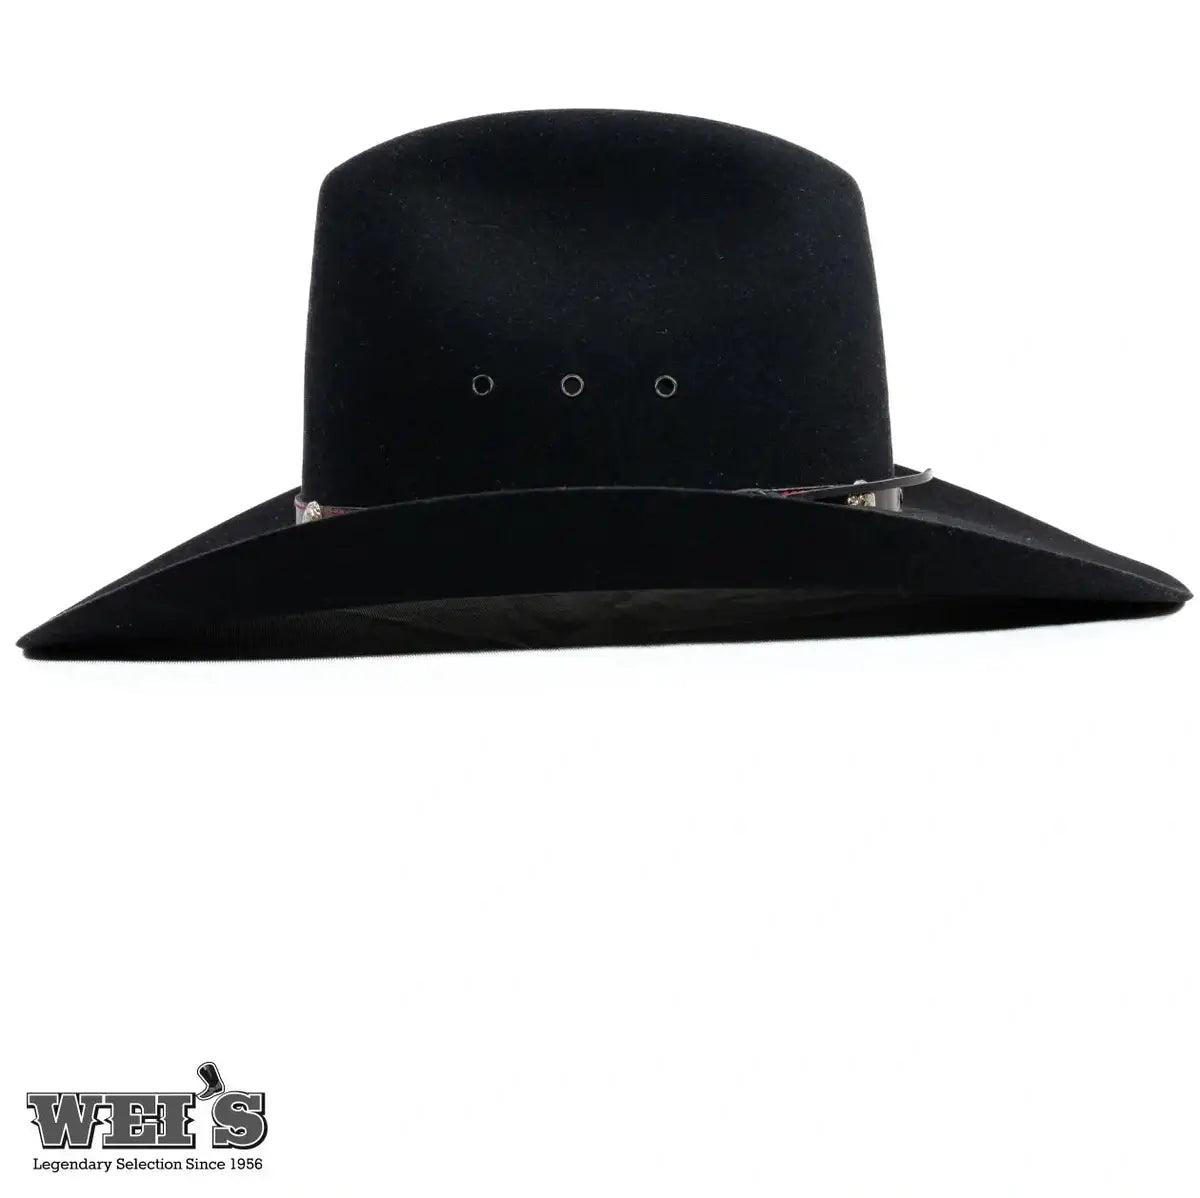 Stetson by Biltmore Cowboy Hats 6X Felt Cattleman CrownSWF0100 - Stetson Hats